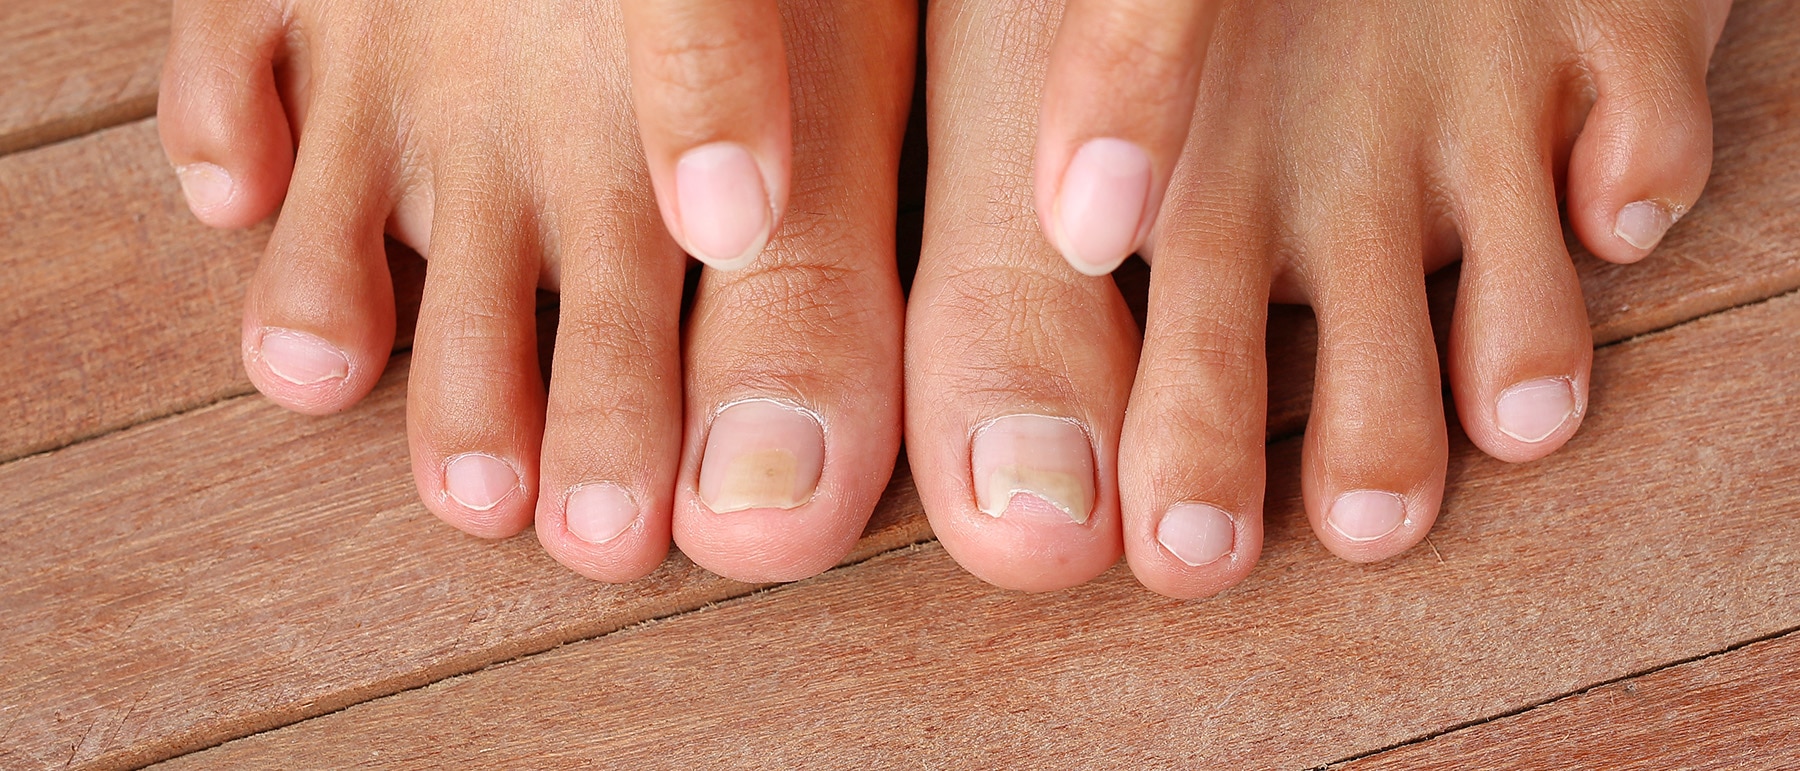 Point to Damaged toenail, broken nail